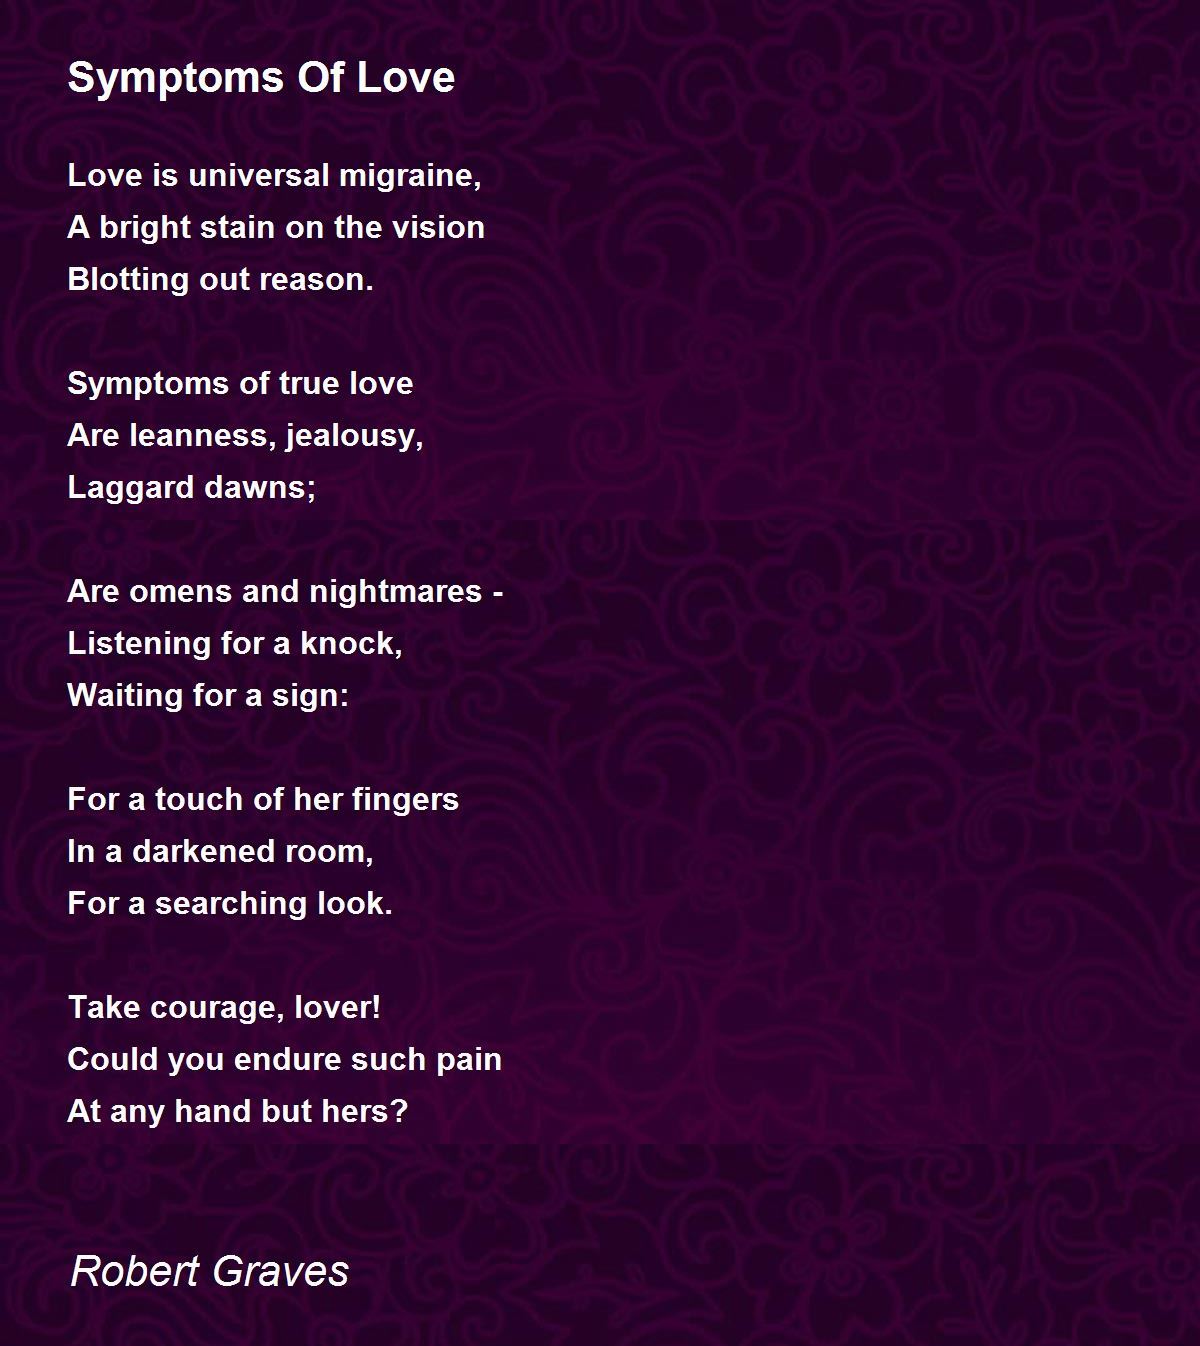 Symptoms Of Love Poem by Robert Graves - Poem Hunter Comments